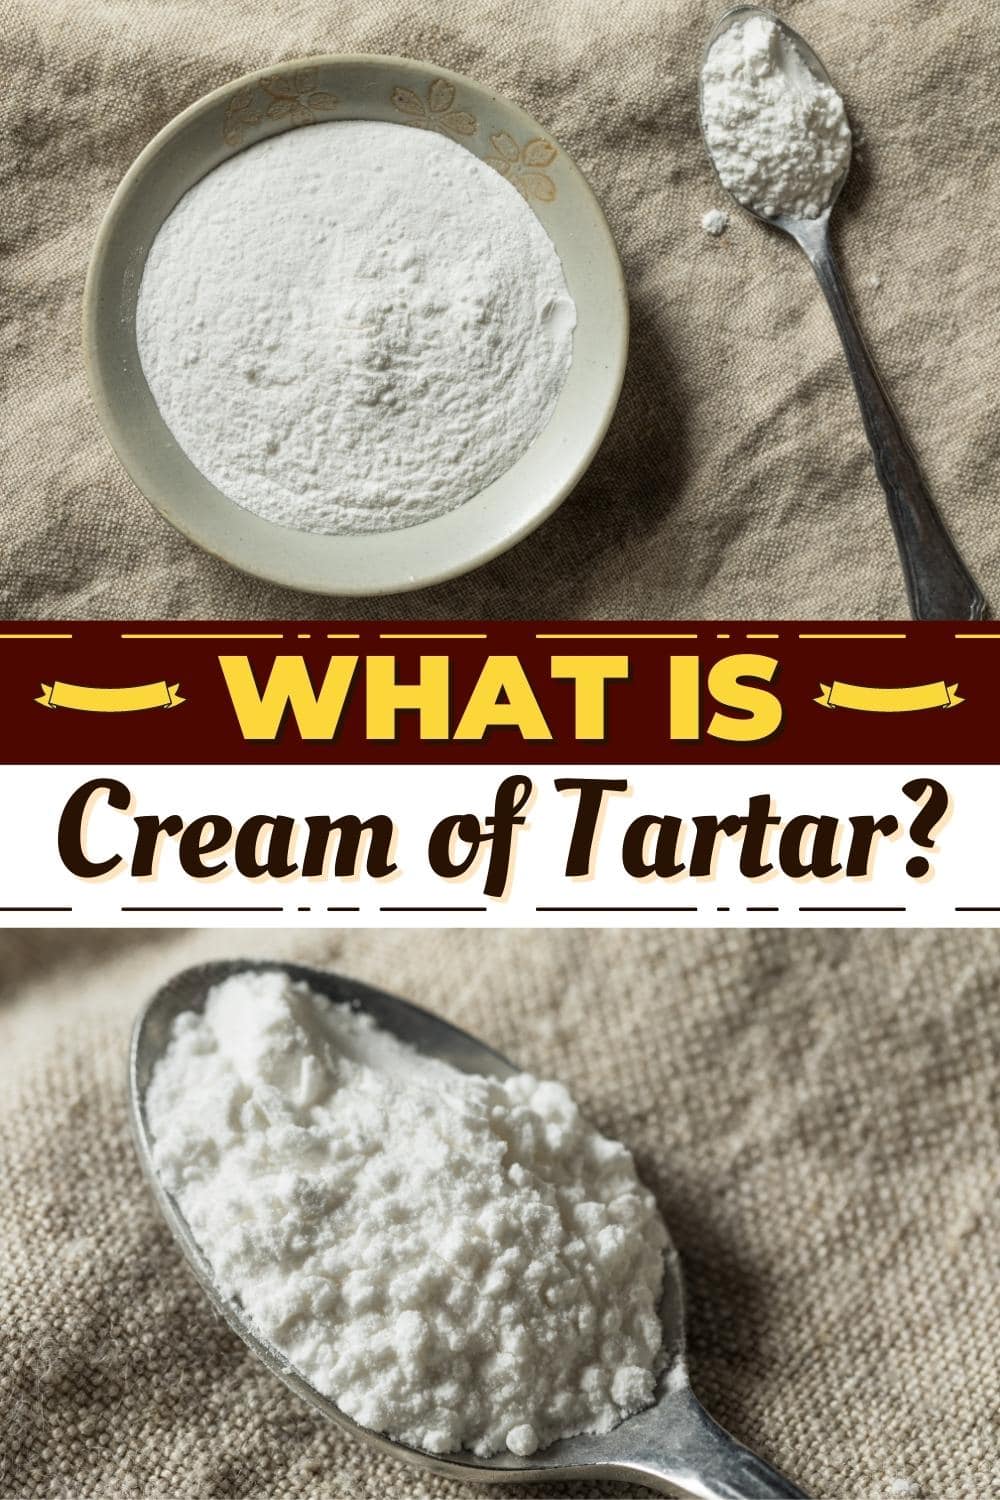 What Is Cream of Tartar?